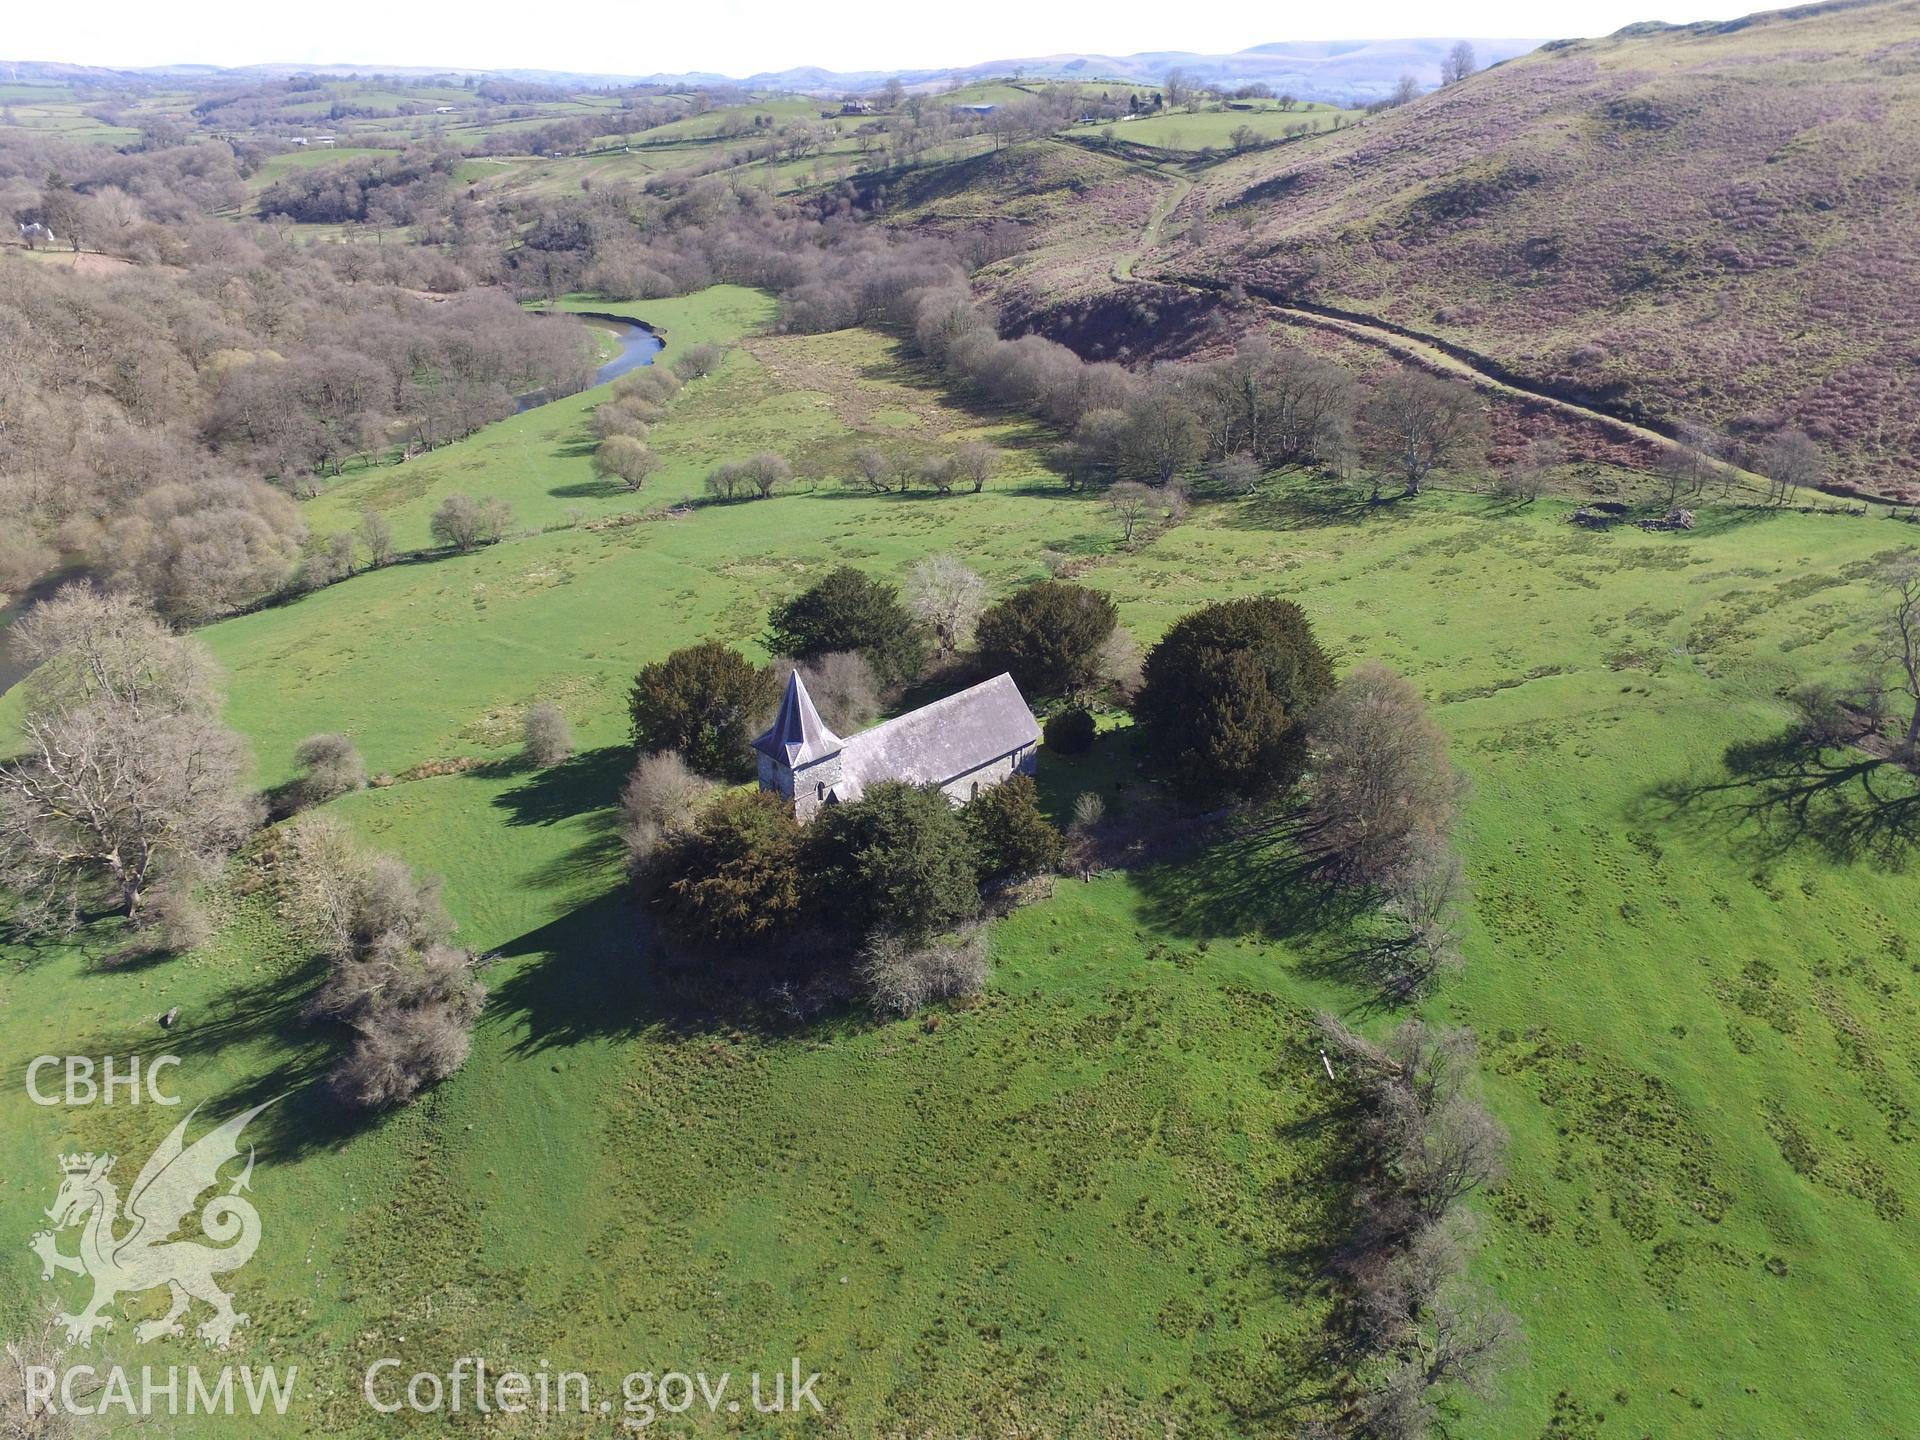 Colour aerial photo showing Cefnllys Church, taken by Paul R. Davis, 17th April 2016.